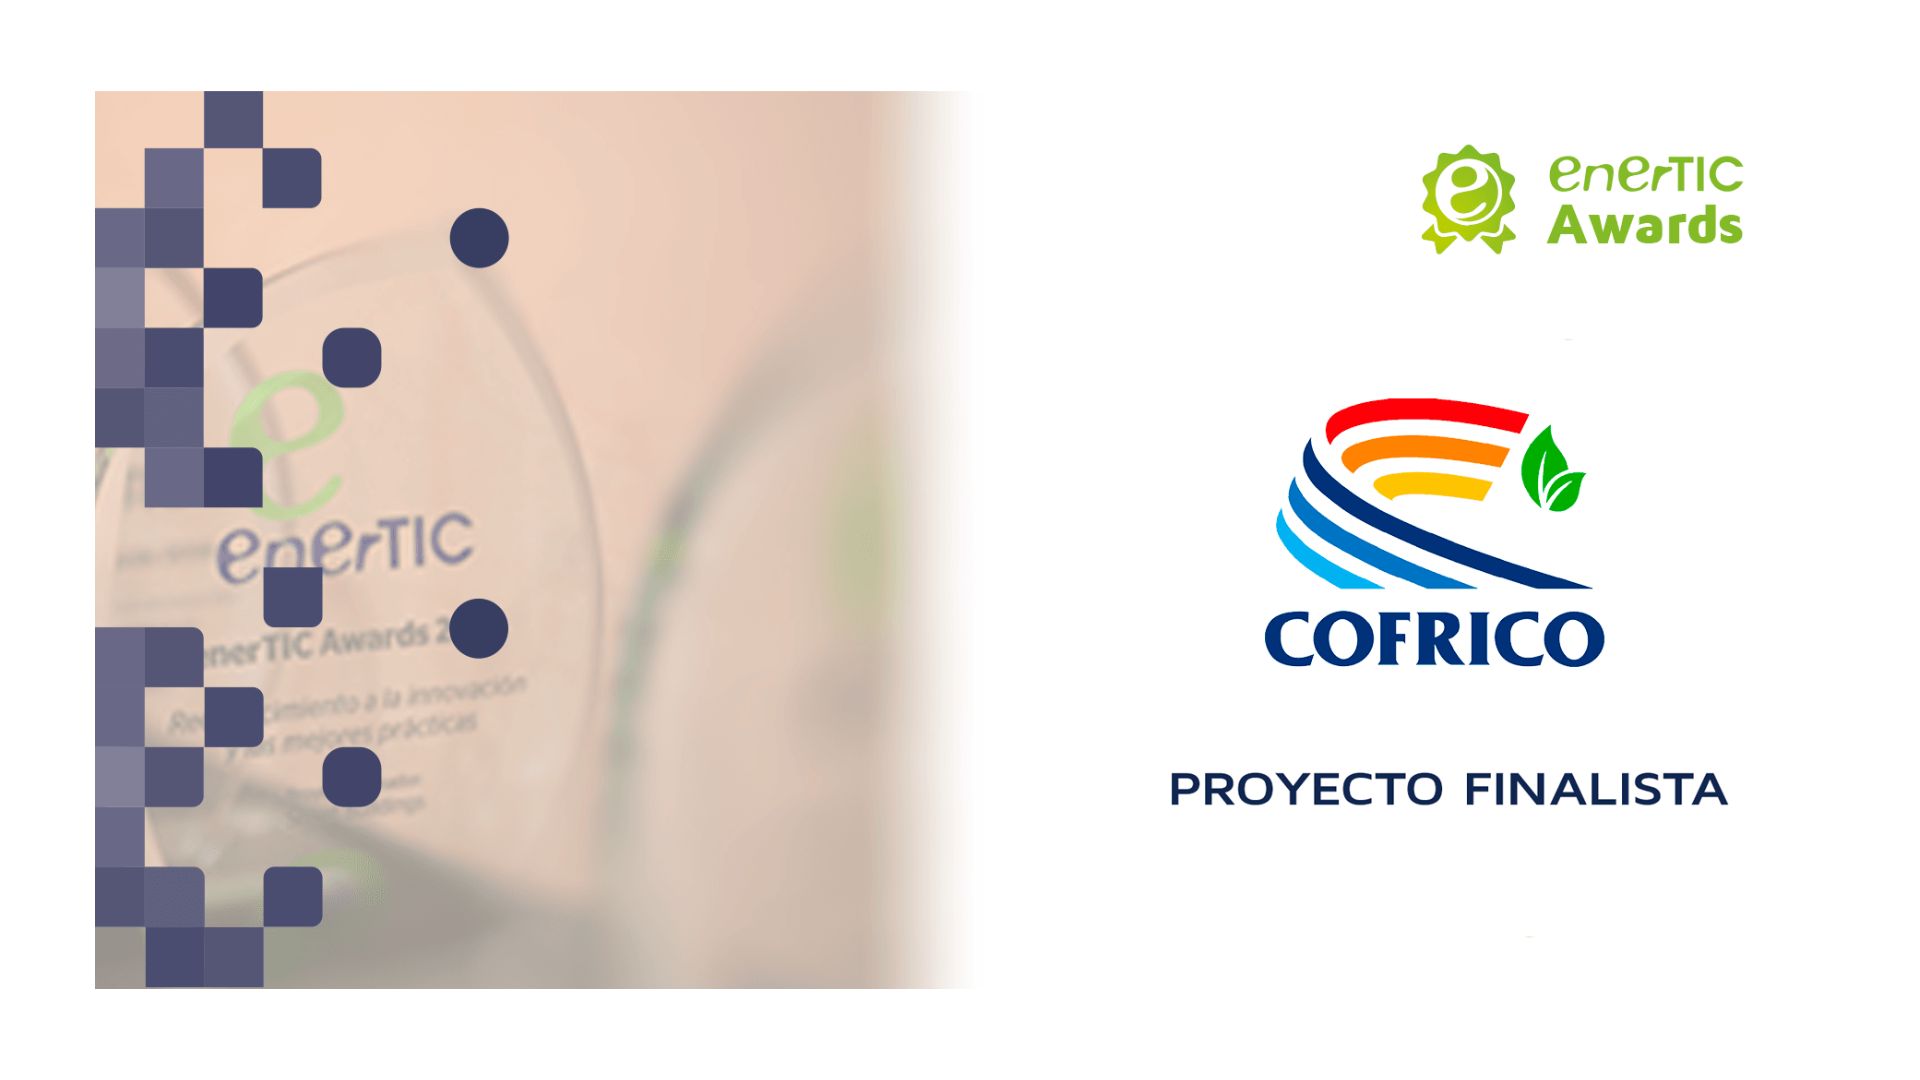 Cofrico finalista ENERTIC Awards 2019 Categoría Power & Cooling